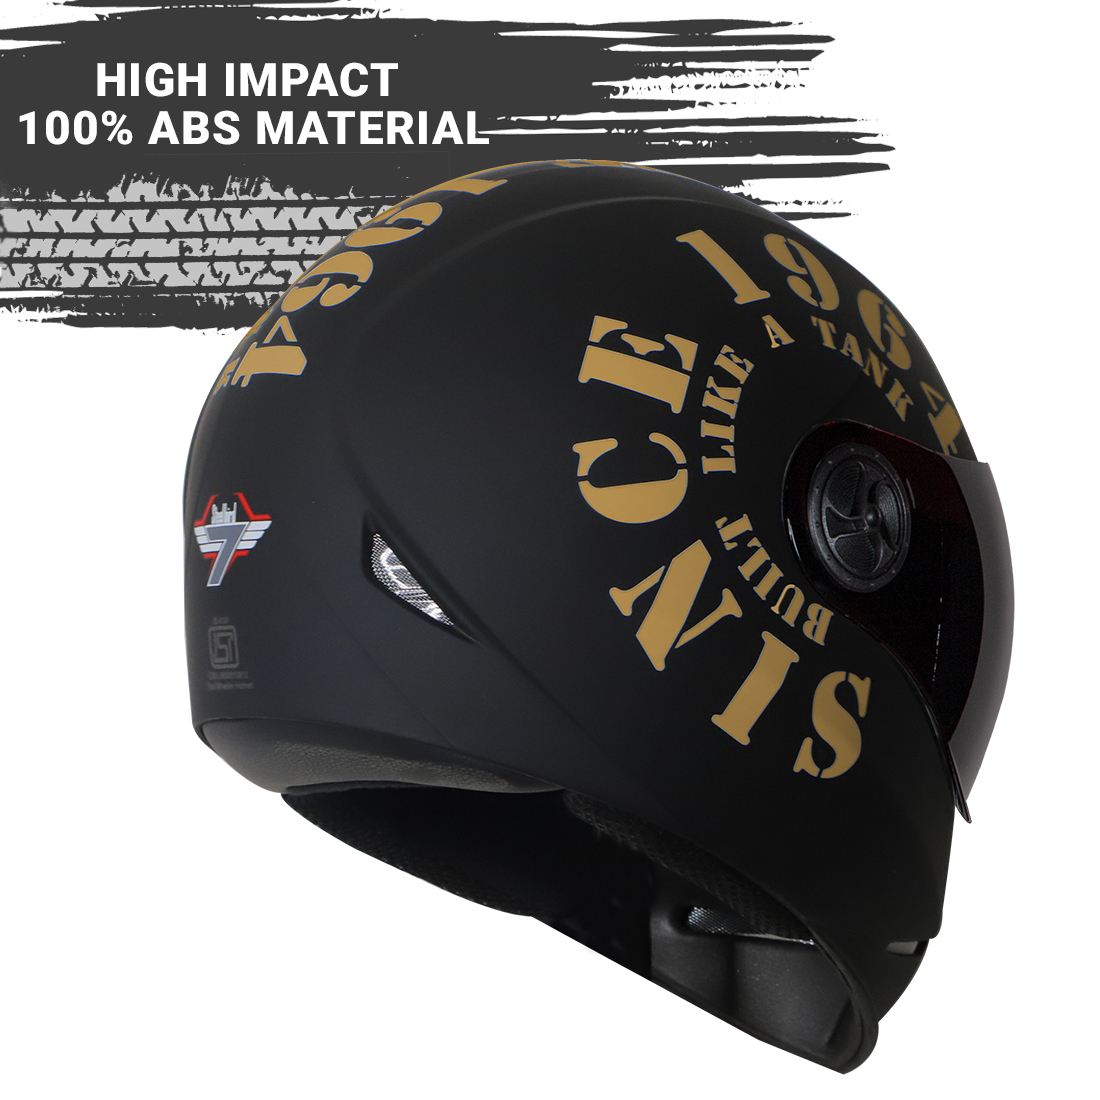 Steelbird SB-50 Adonis Tank Full Face Graphic Helmet Motorbike Helmet (Matt Black Gold With Smoke Visor)